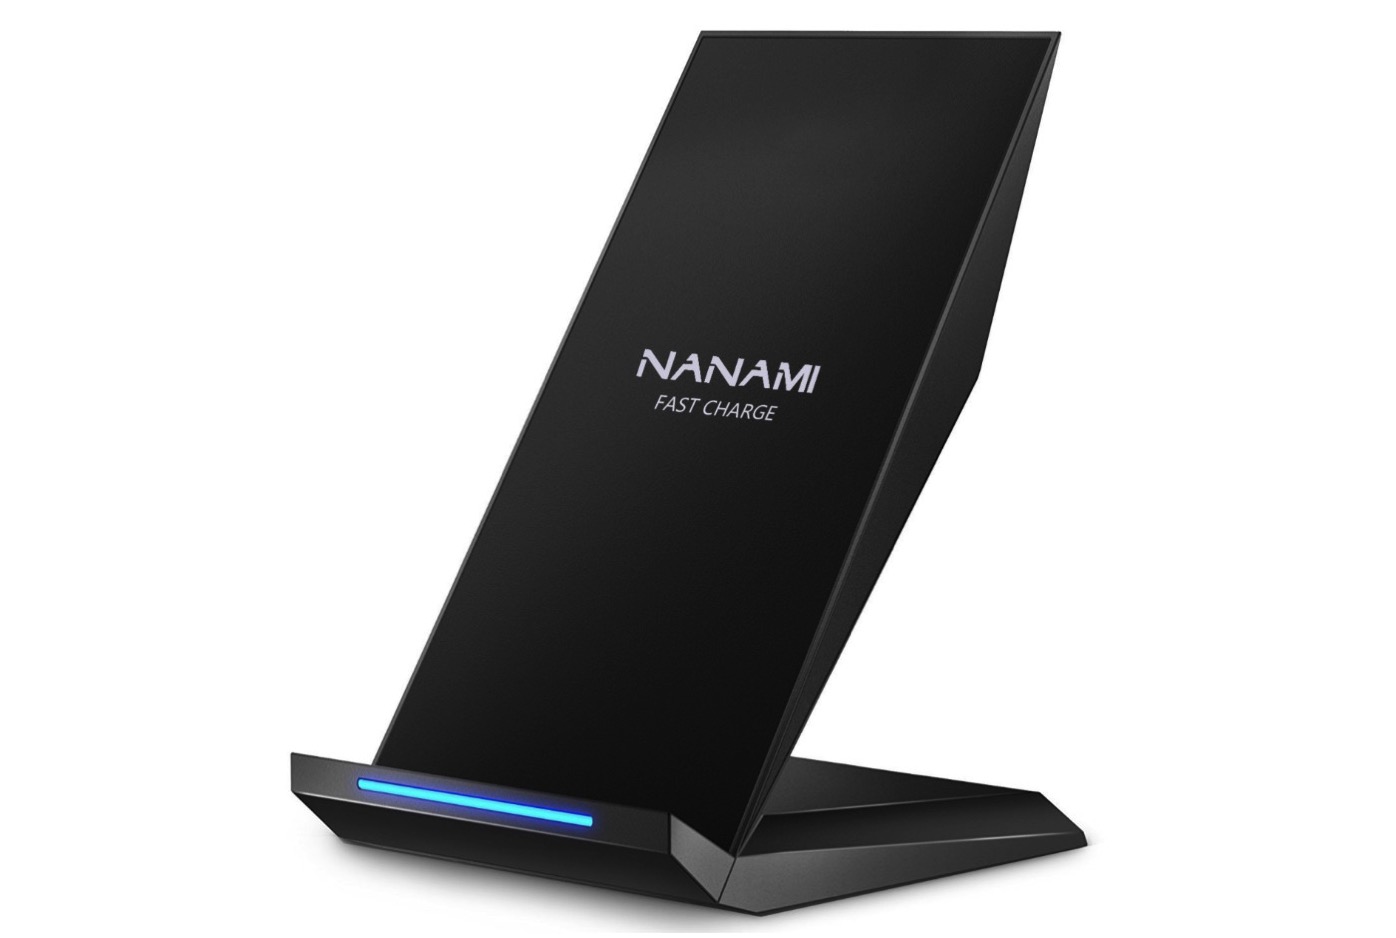 [Amazon]「iPhone X」用にAmazonベストセラー1位のQi 急速 ワイヤレス充電器 NANAMI Quick Charge 2.0 を購入してみたよ